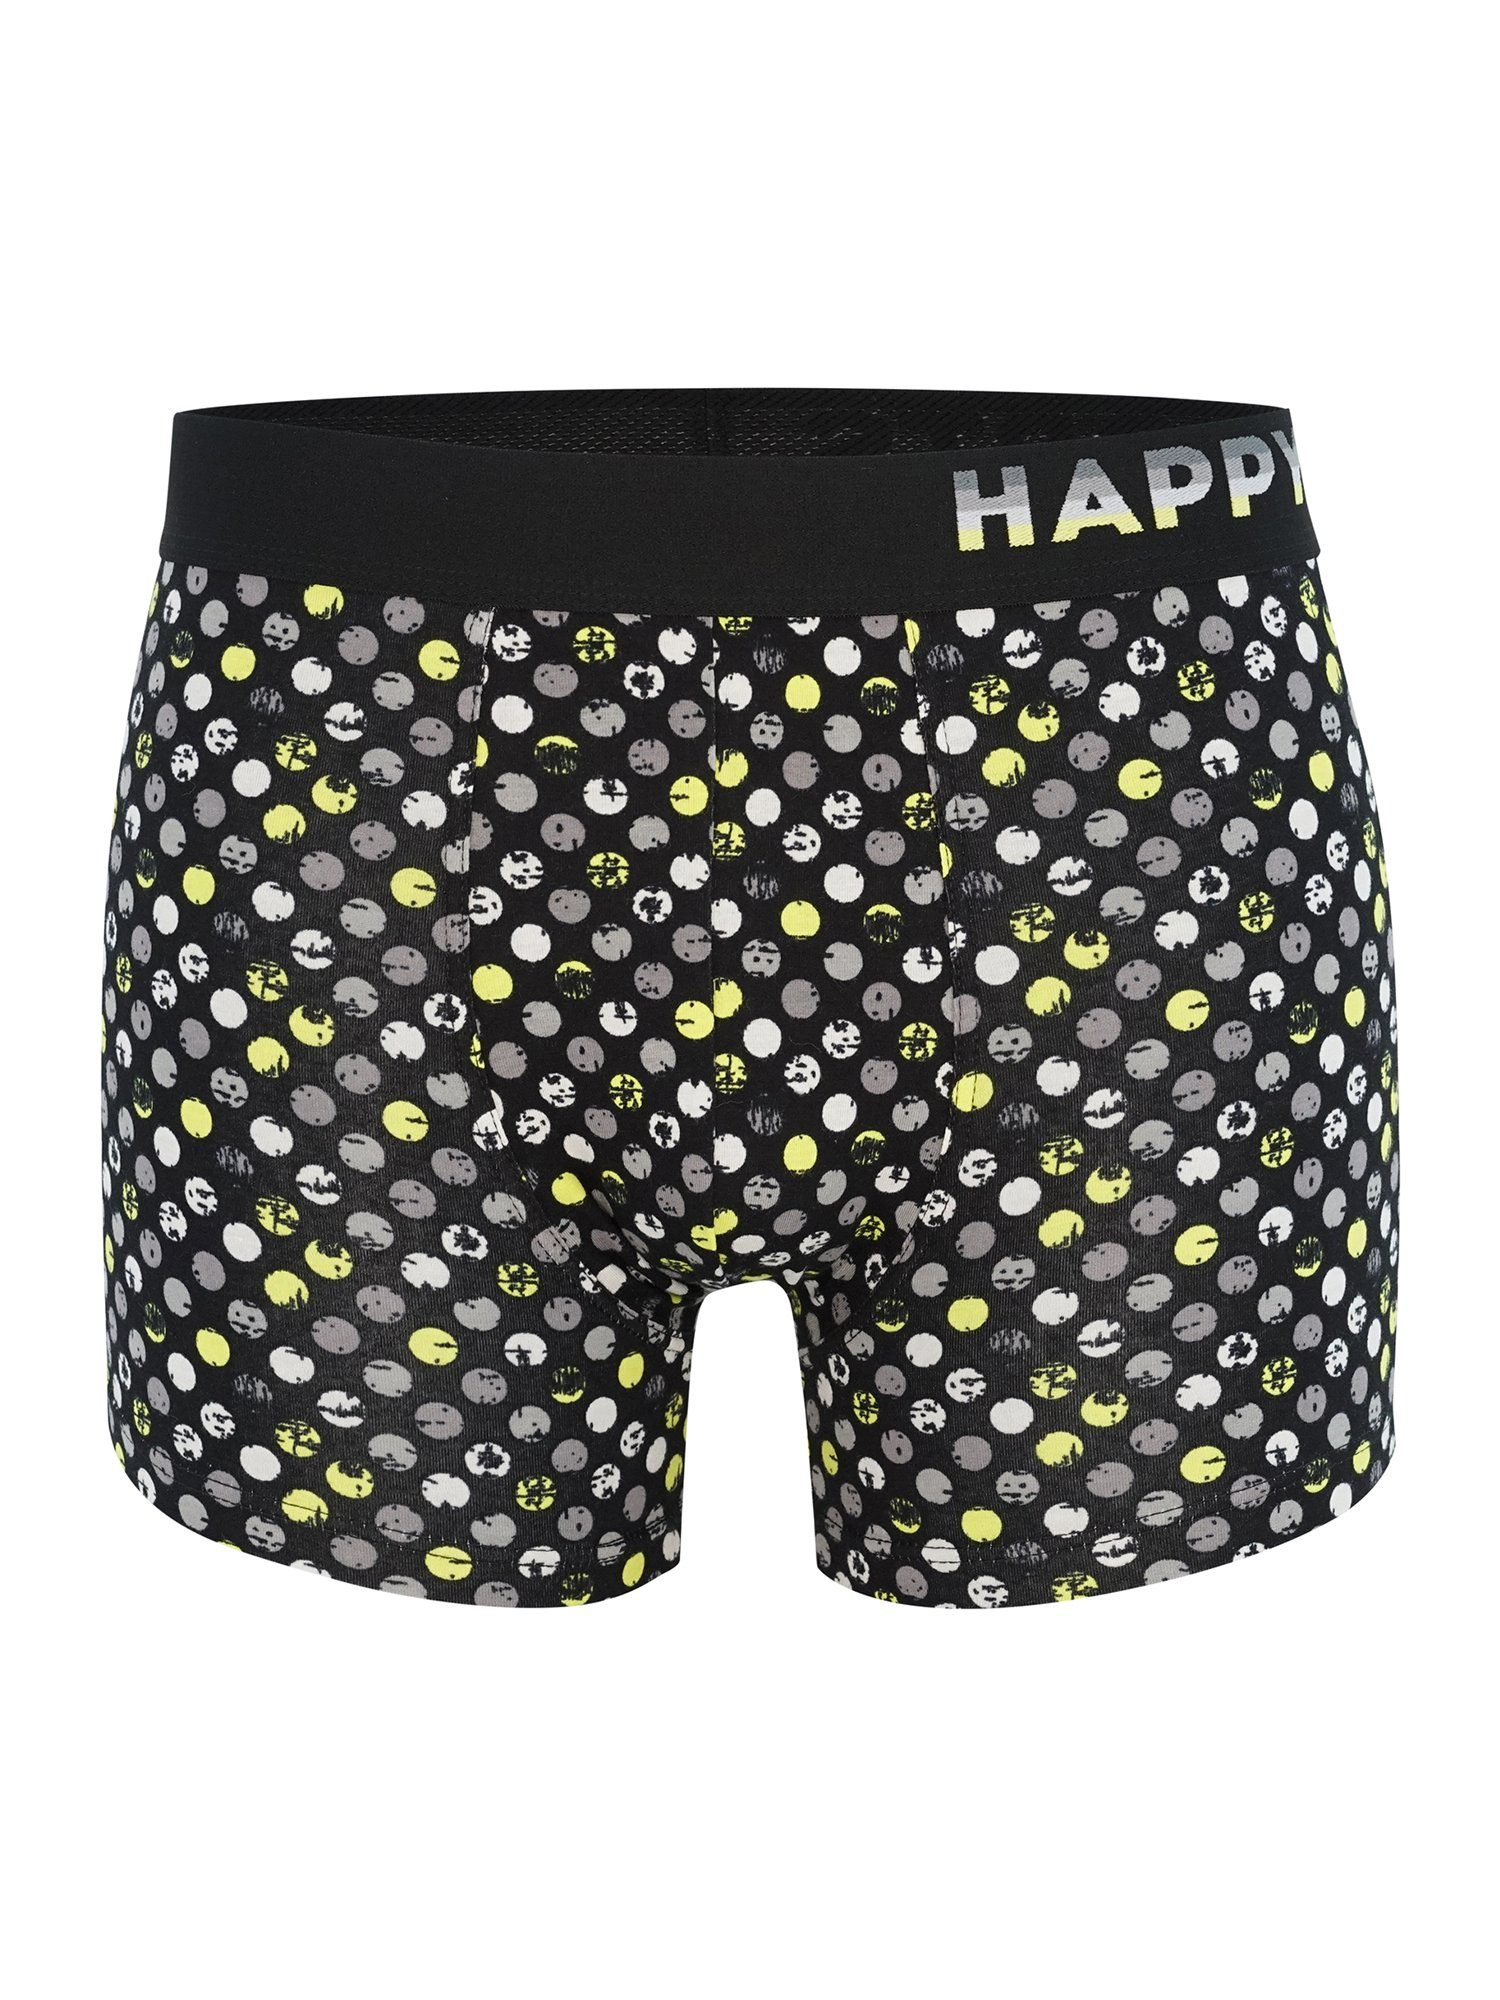 Trunks Polka Motivprint Neon SHORTS Pants Retro HAPPY